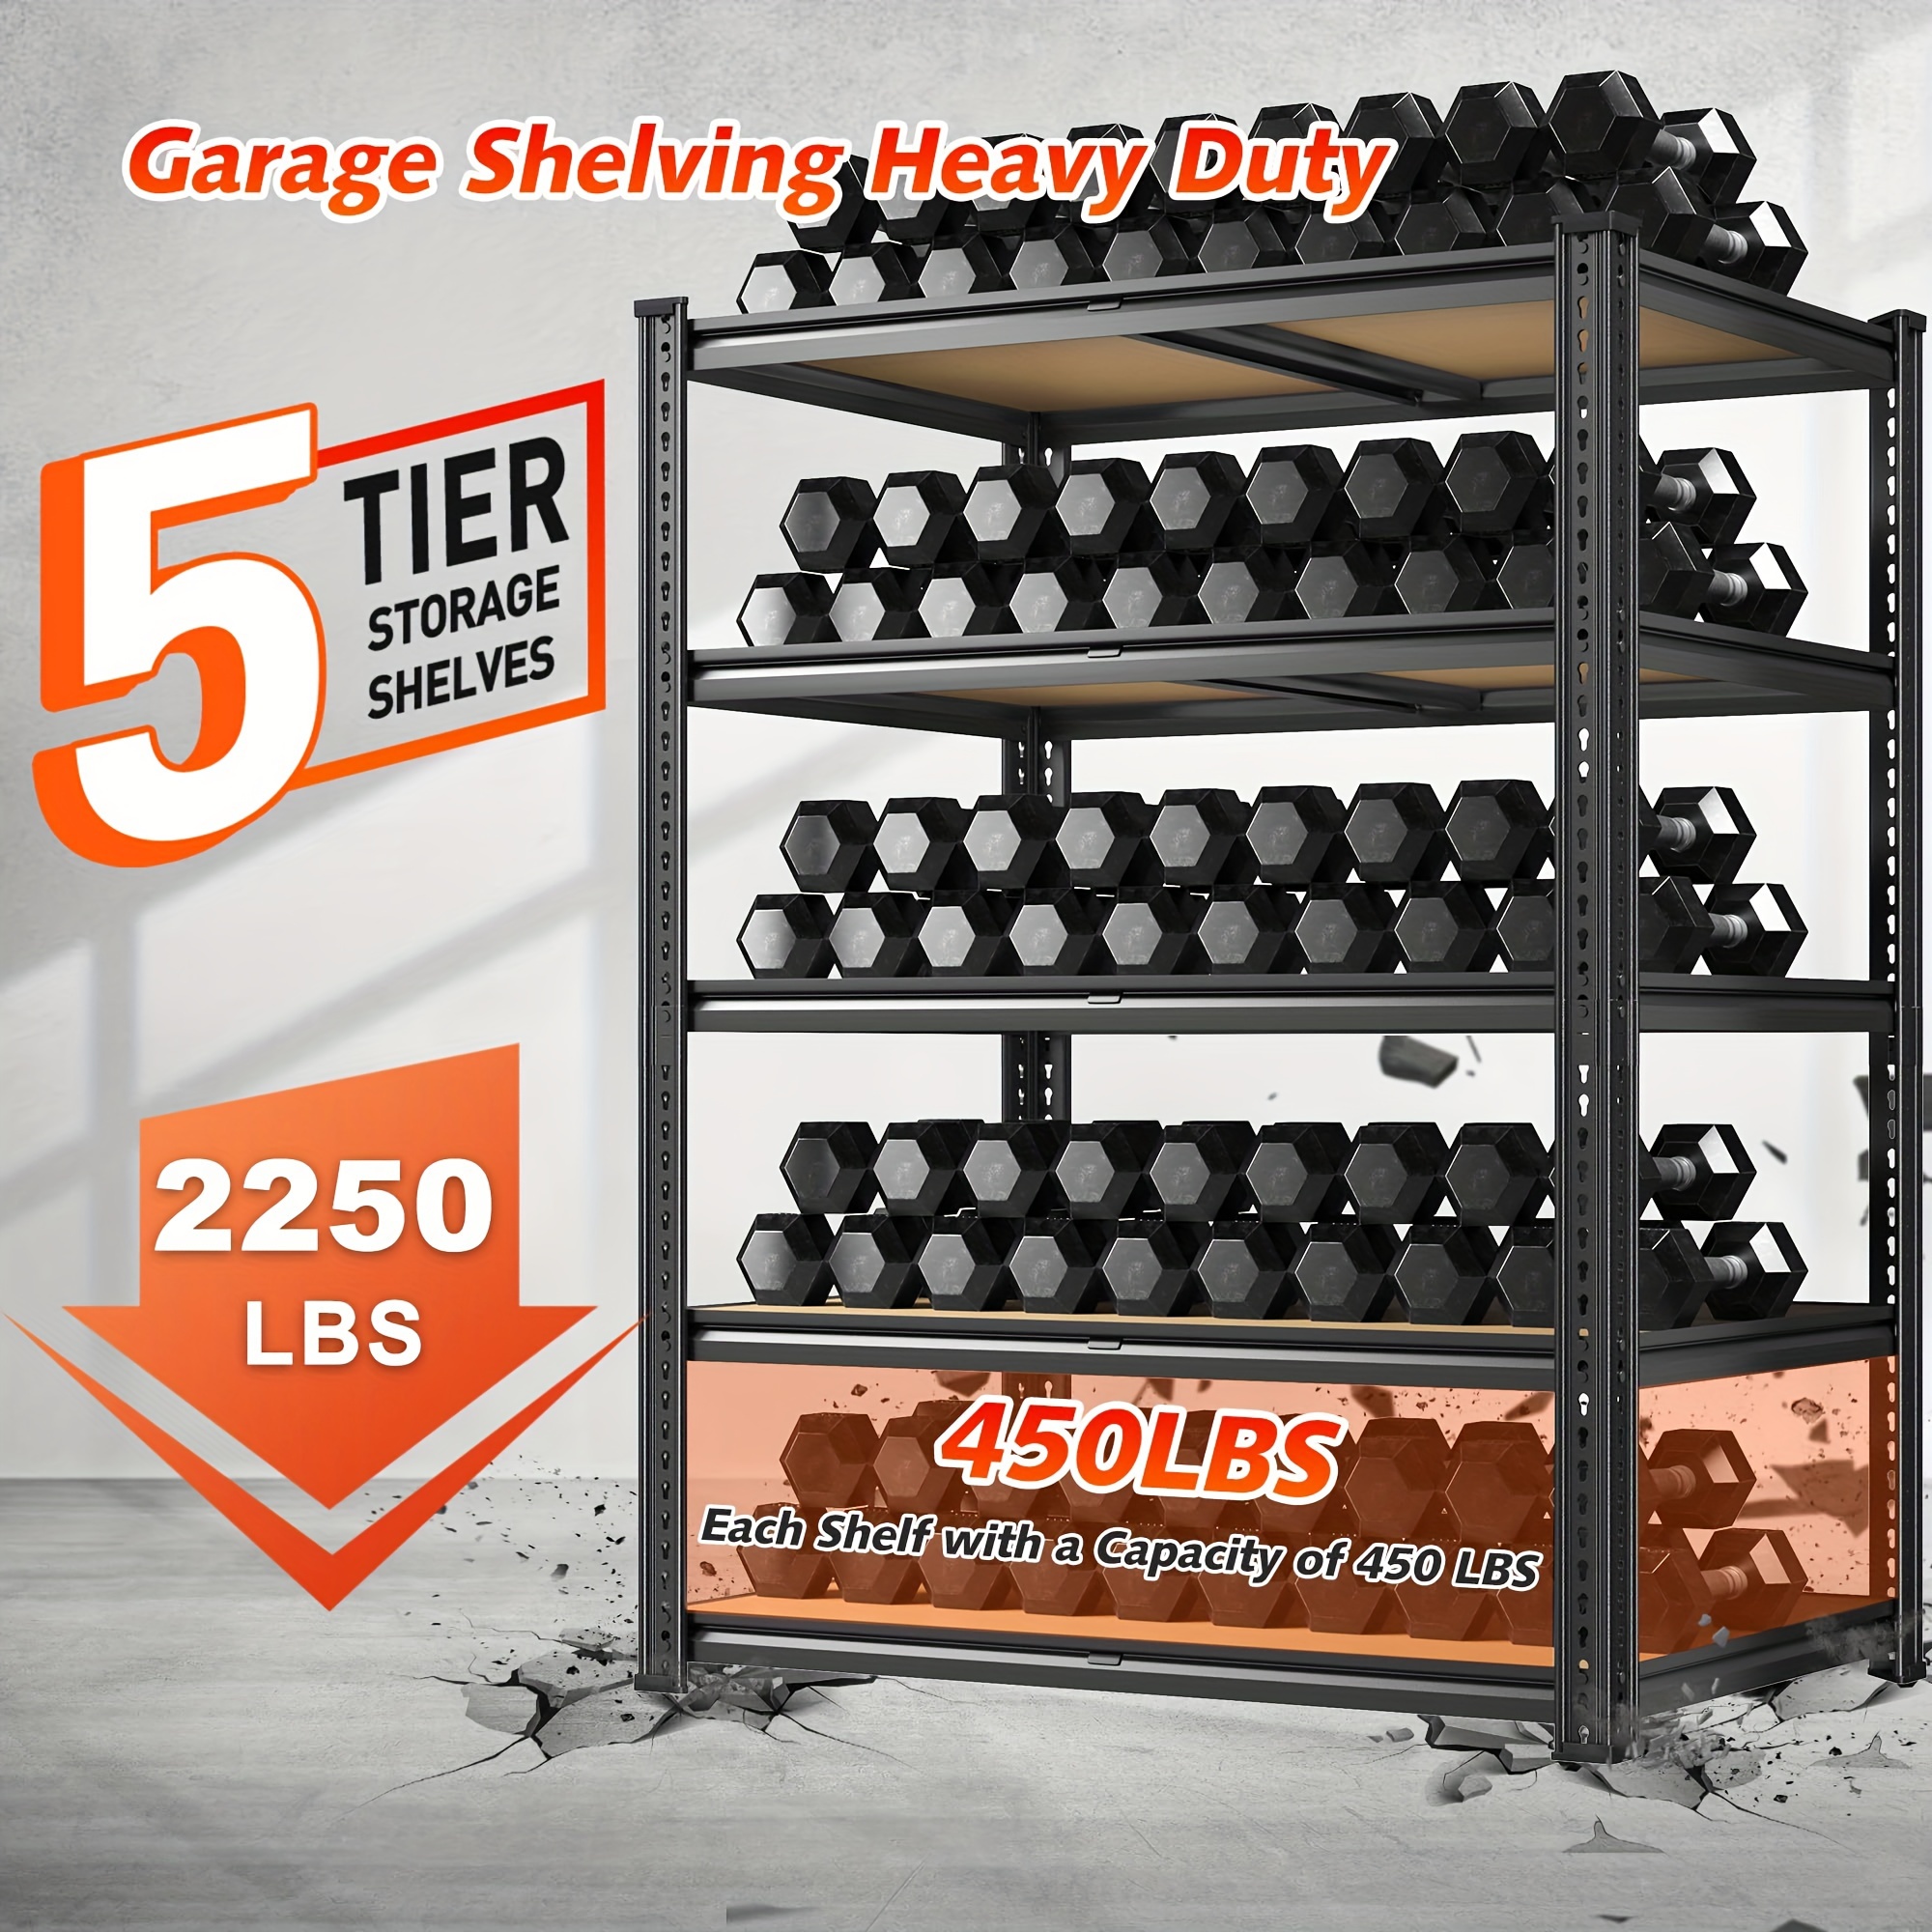 

2250lbs Garage Shelving Heavy Duty Shelving Garage Storage Shelves 5-tier Adjustable Metal Shelves For Storage Rack, Shelving Units And Storage For Pantry Industrial Shelving 72"hx35.5"wx17.7"d